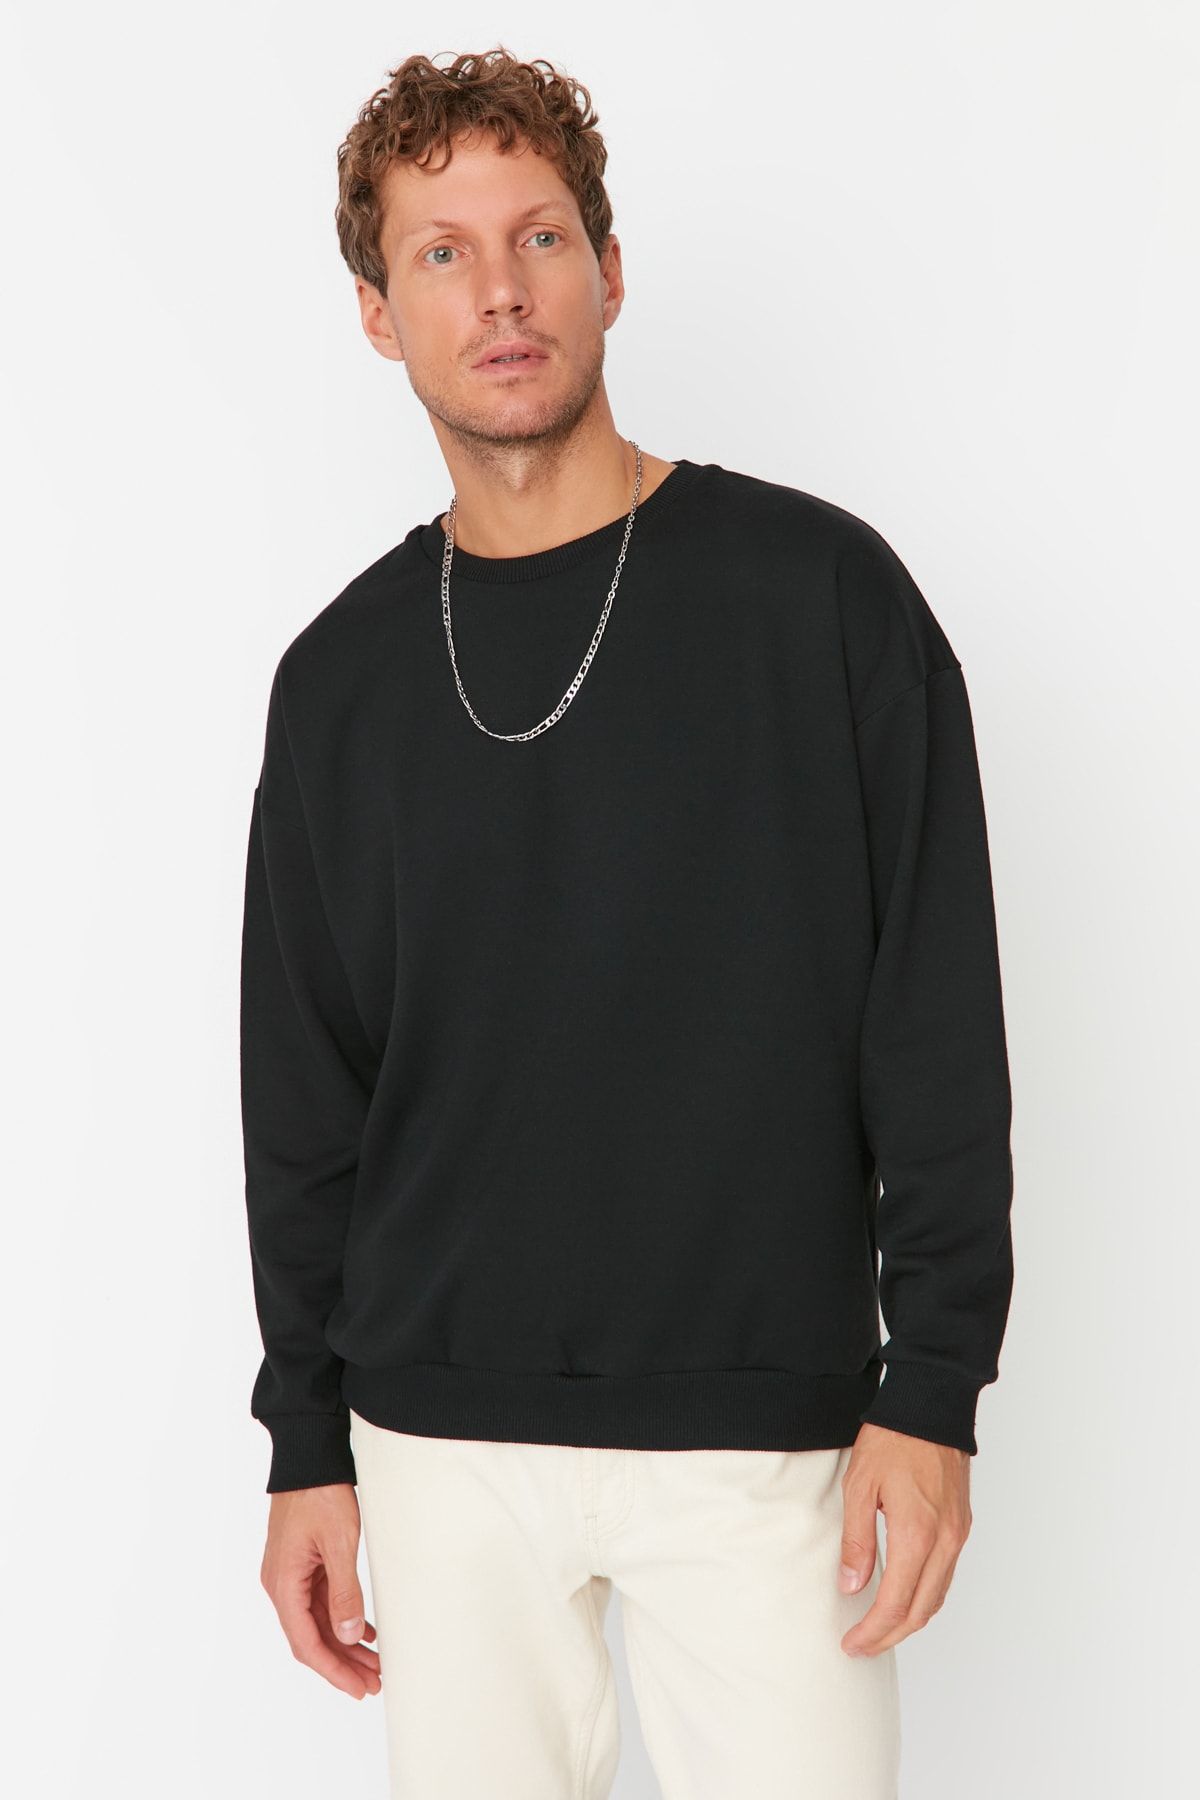 Trendyol Collection Sweatshirt - Black - Regular fit - Trendyol